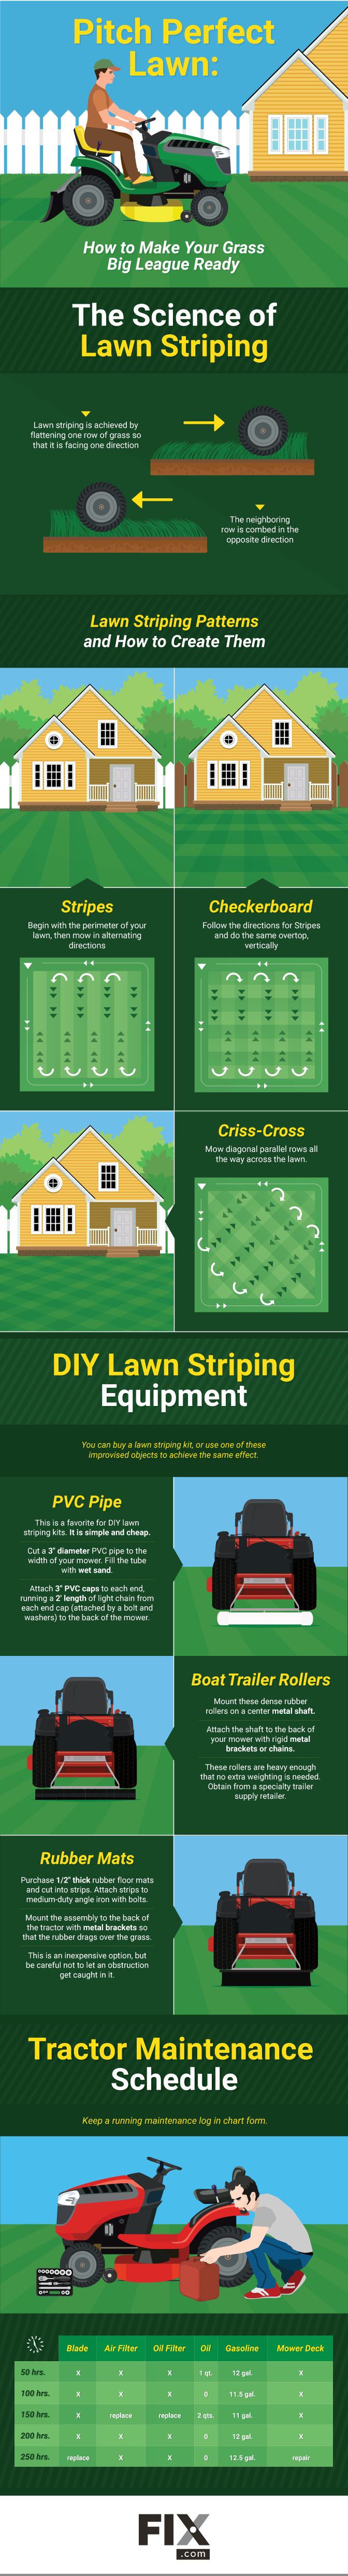 Professional Lawn Striping Tips Fix Com